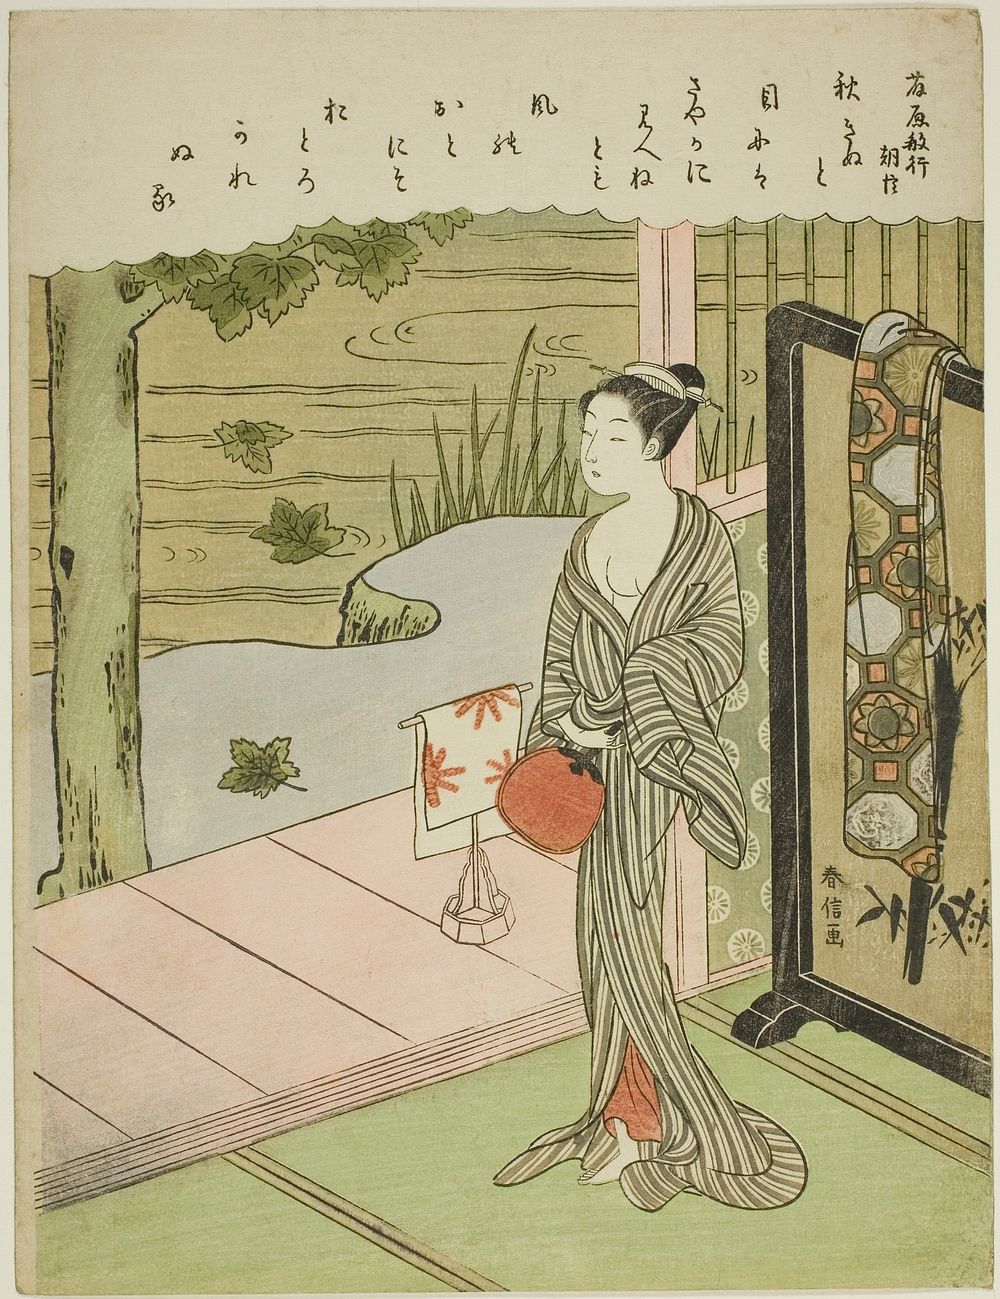 Poem by Fujiwara no Toshiyuki, from an untitled series of Thirty-Six Immortal Poets by Suzuki Harunobu